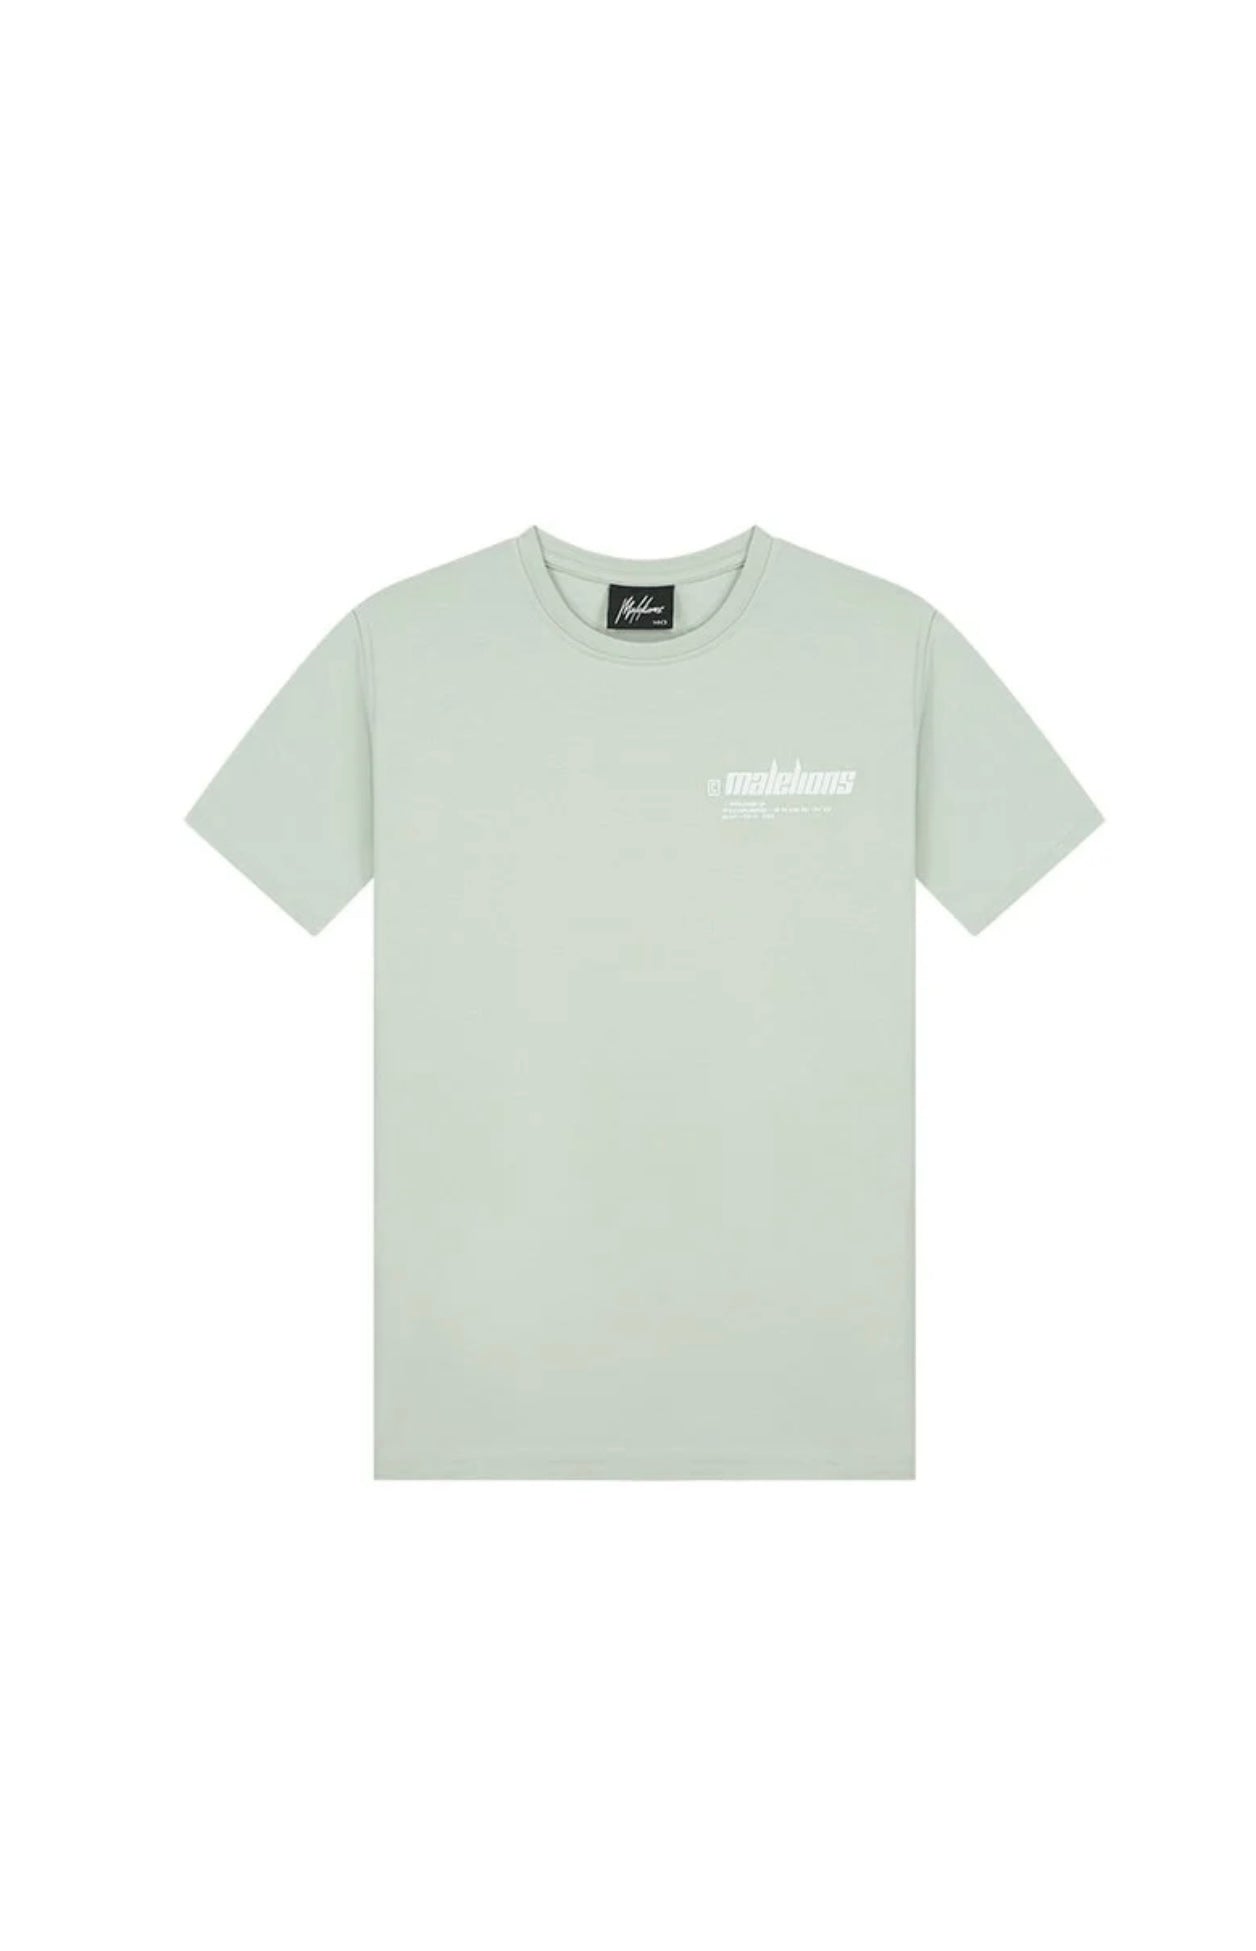 Malelions junior worldwide t-shirt - aqua grey